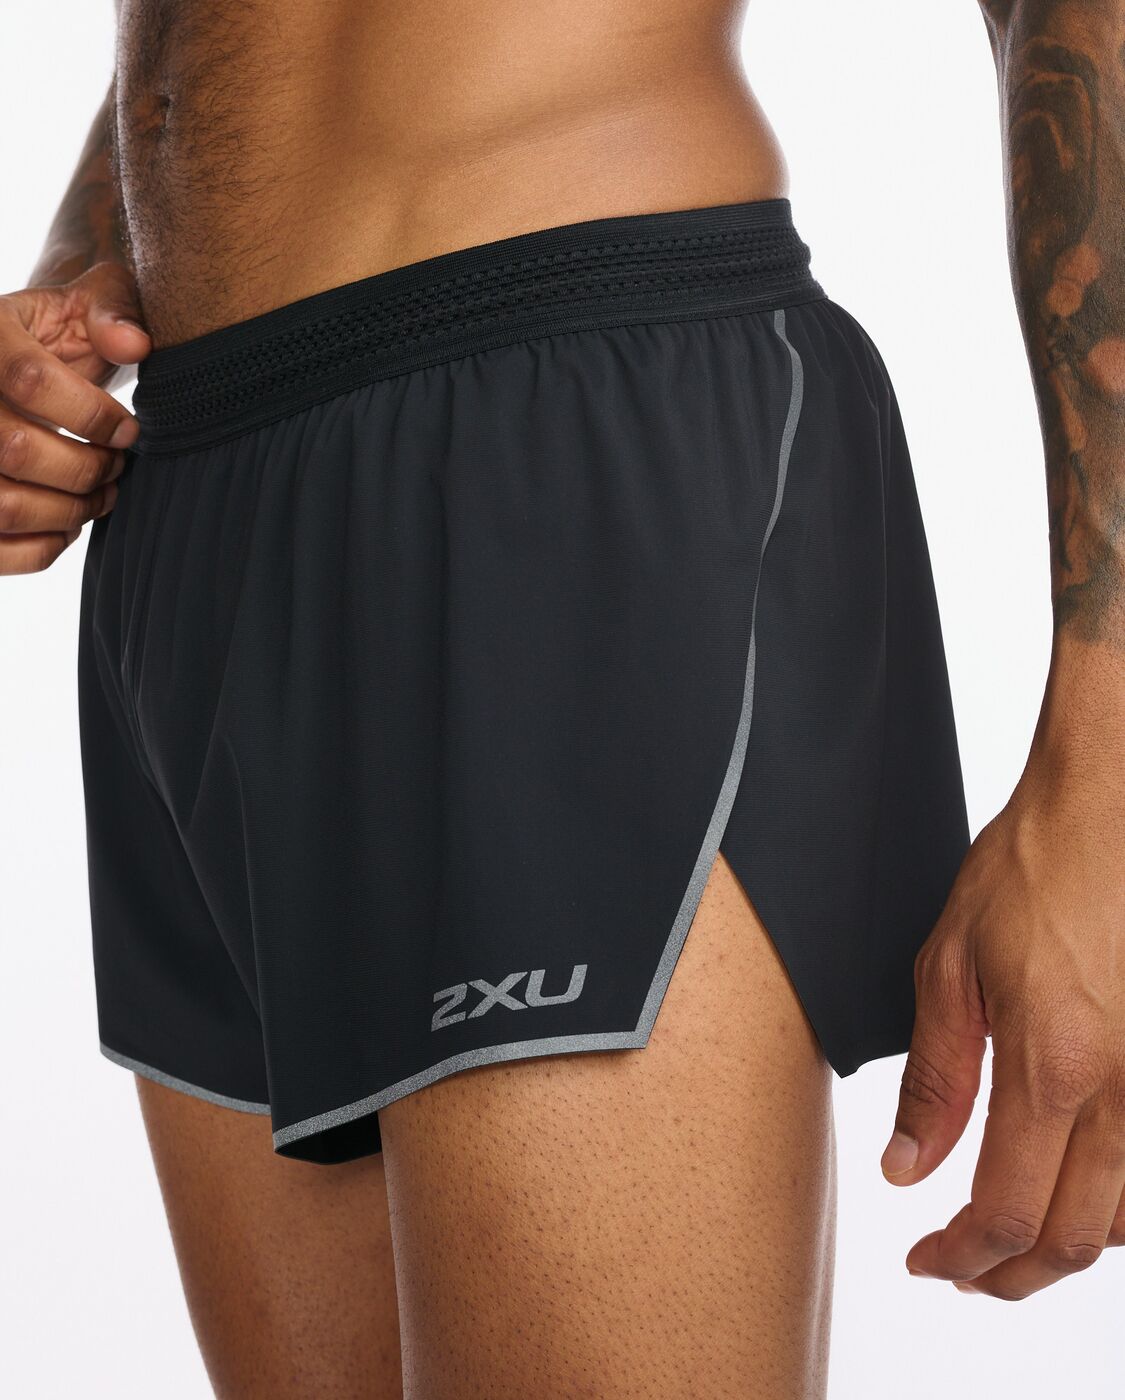 2XU South Africa - Mens Light Speed 3 inch Shorts - Black/Black Reflective